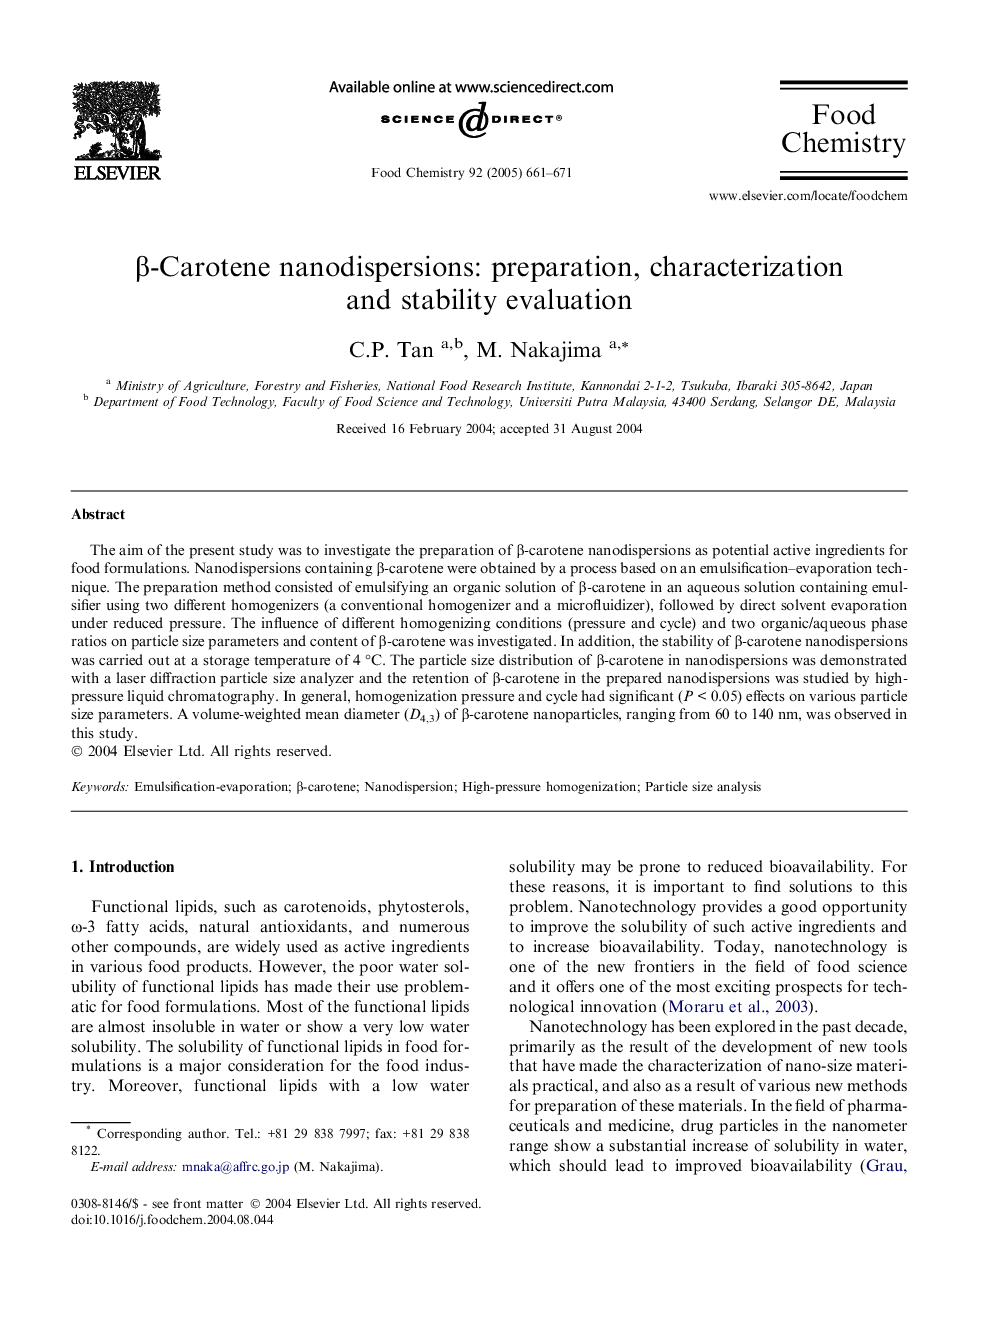 Î²-Carotene nanodispersions: preparation, characterization and stability evaluation